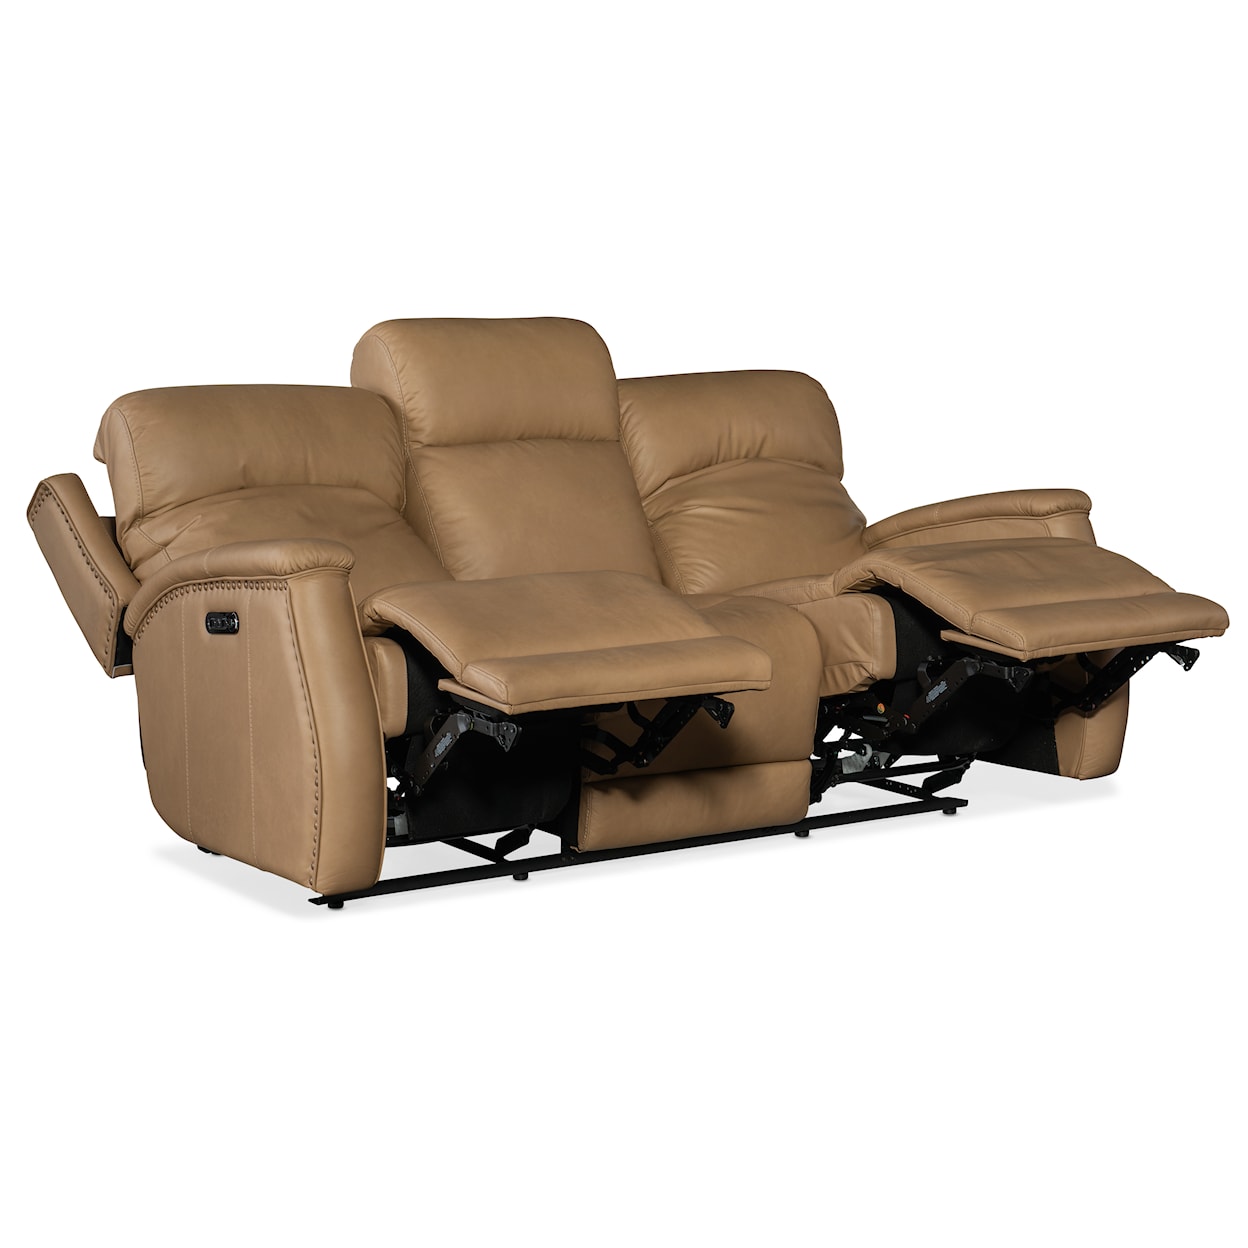 Hooker Furniture Rhea Ss703 Phz3 080 Zero Gravity Power Recline Sofa With Power Headrest Baer